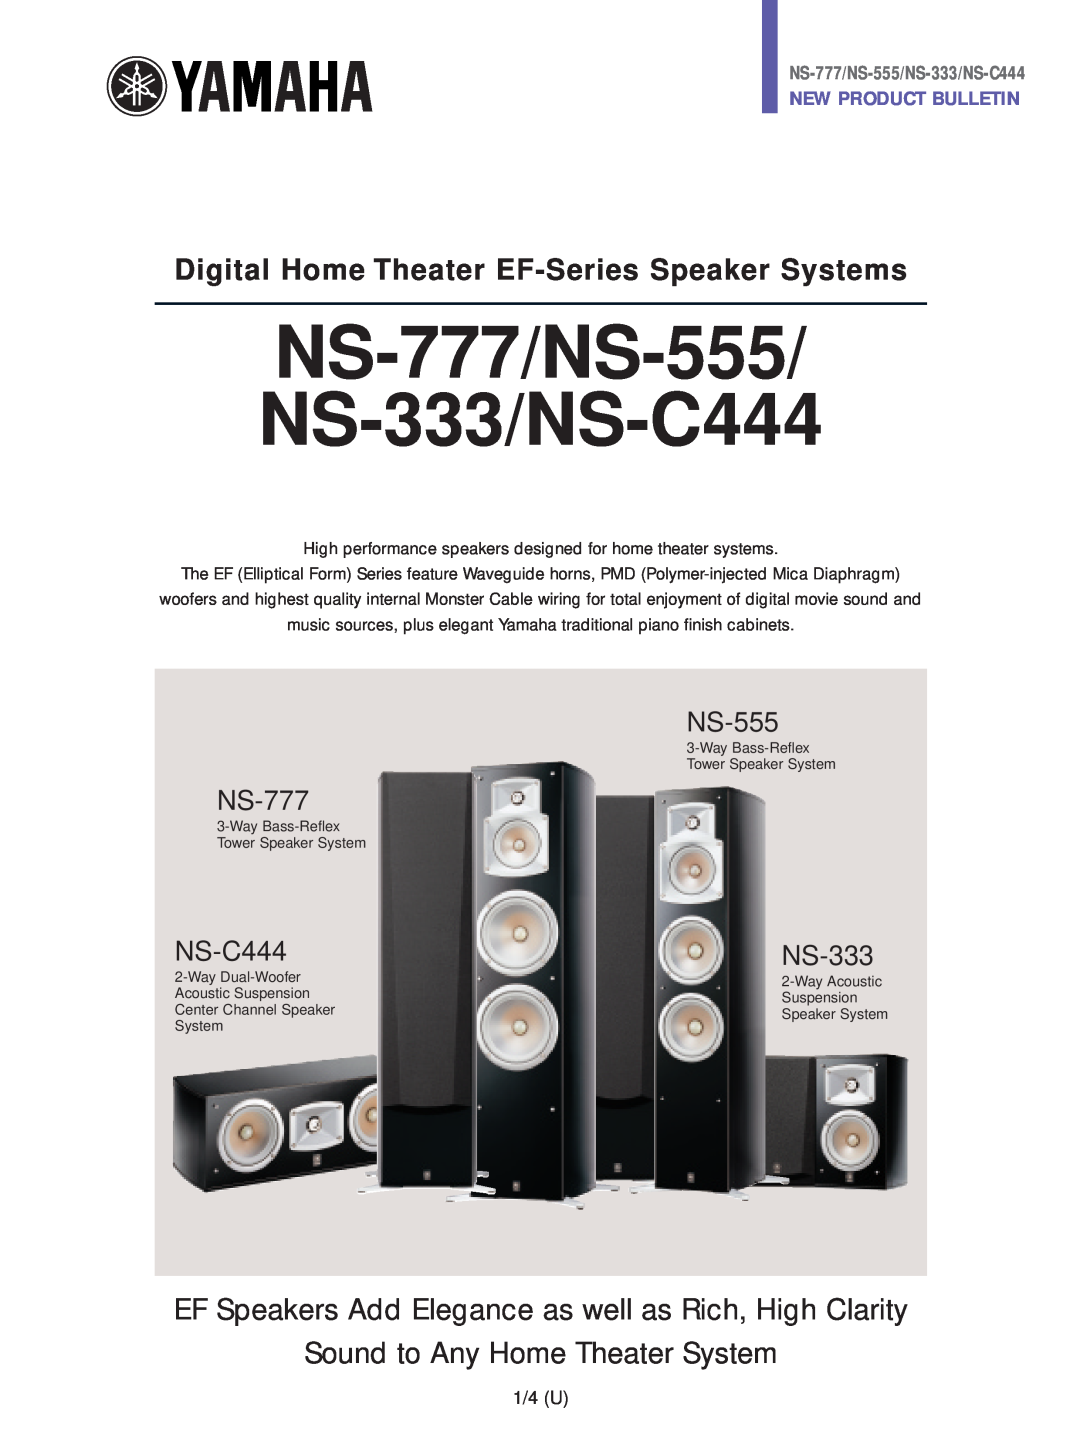 Yamaha manual NS-777/NS-555 NS-333/NS-C444, Digital Home Theater EF-SeriesSpeaker Systems, NS-777/NS-555/NS-333/NS-C444 